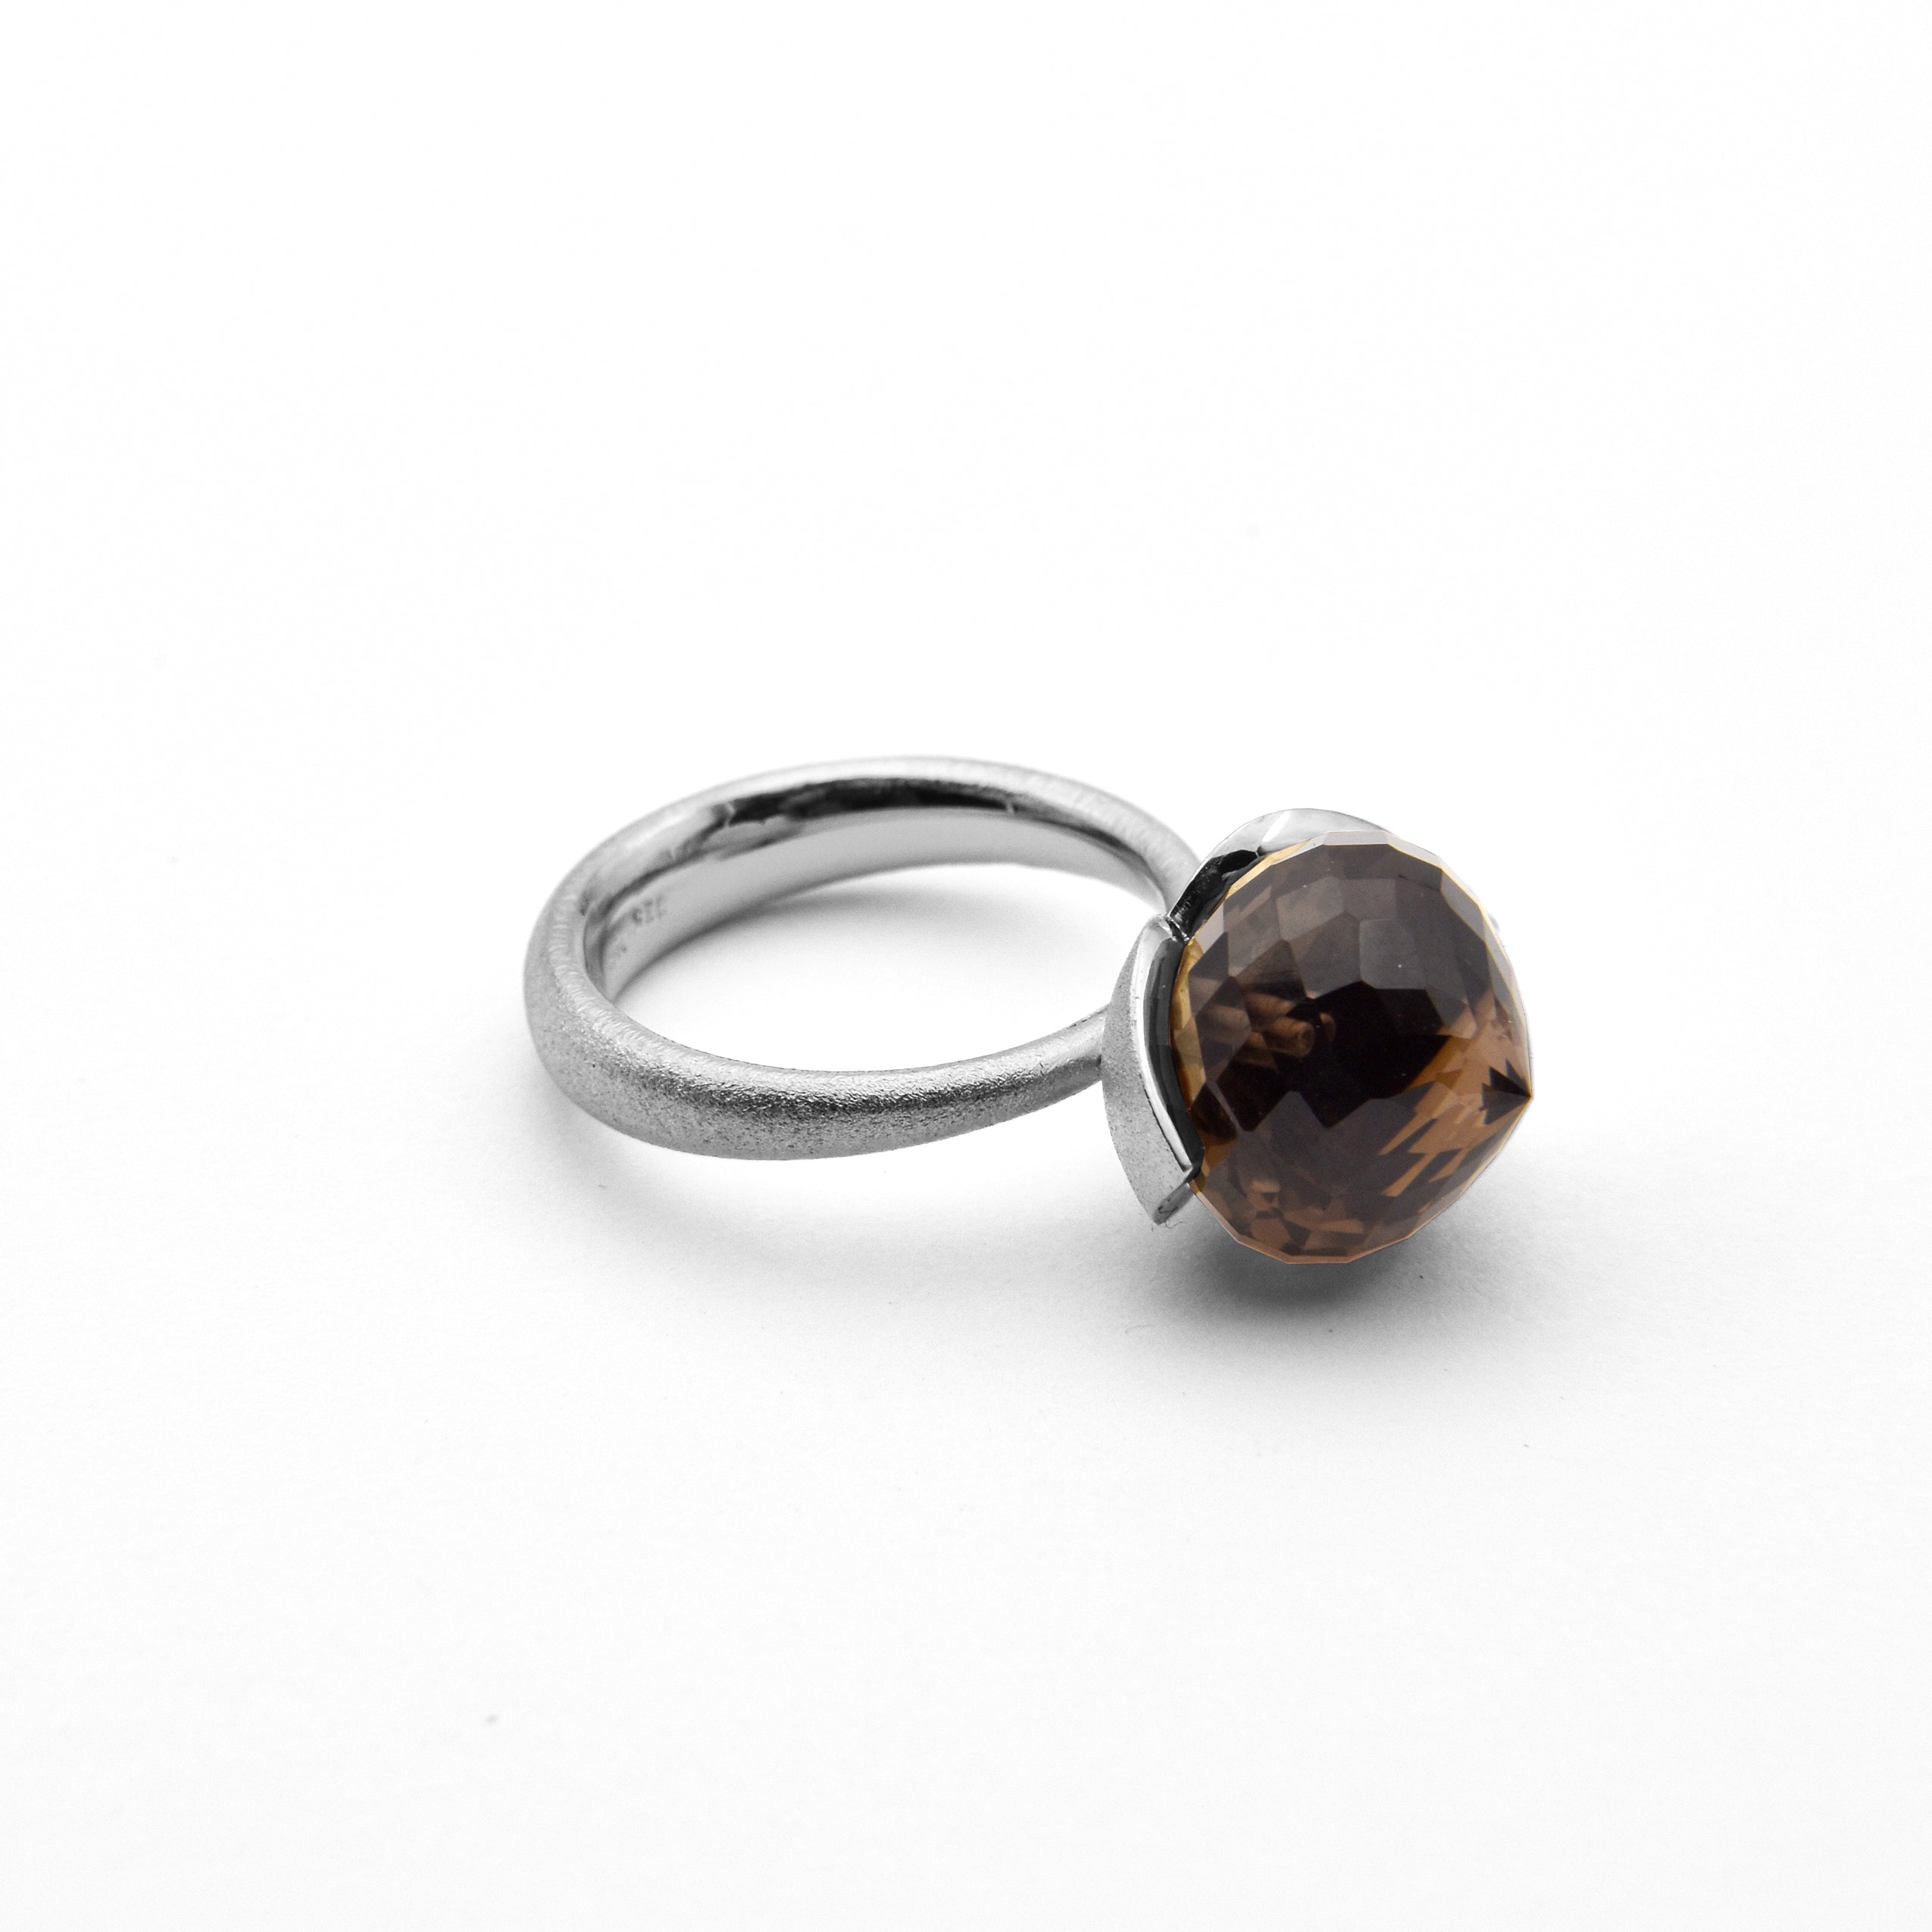 Dolce ring "big" with smoky quartz 925/-